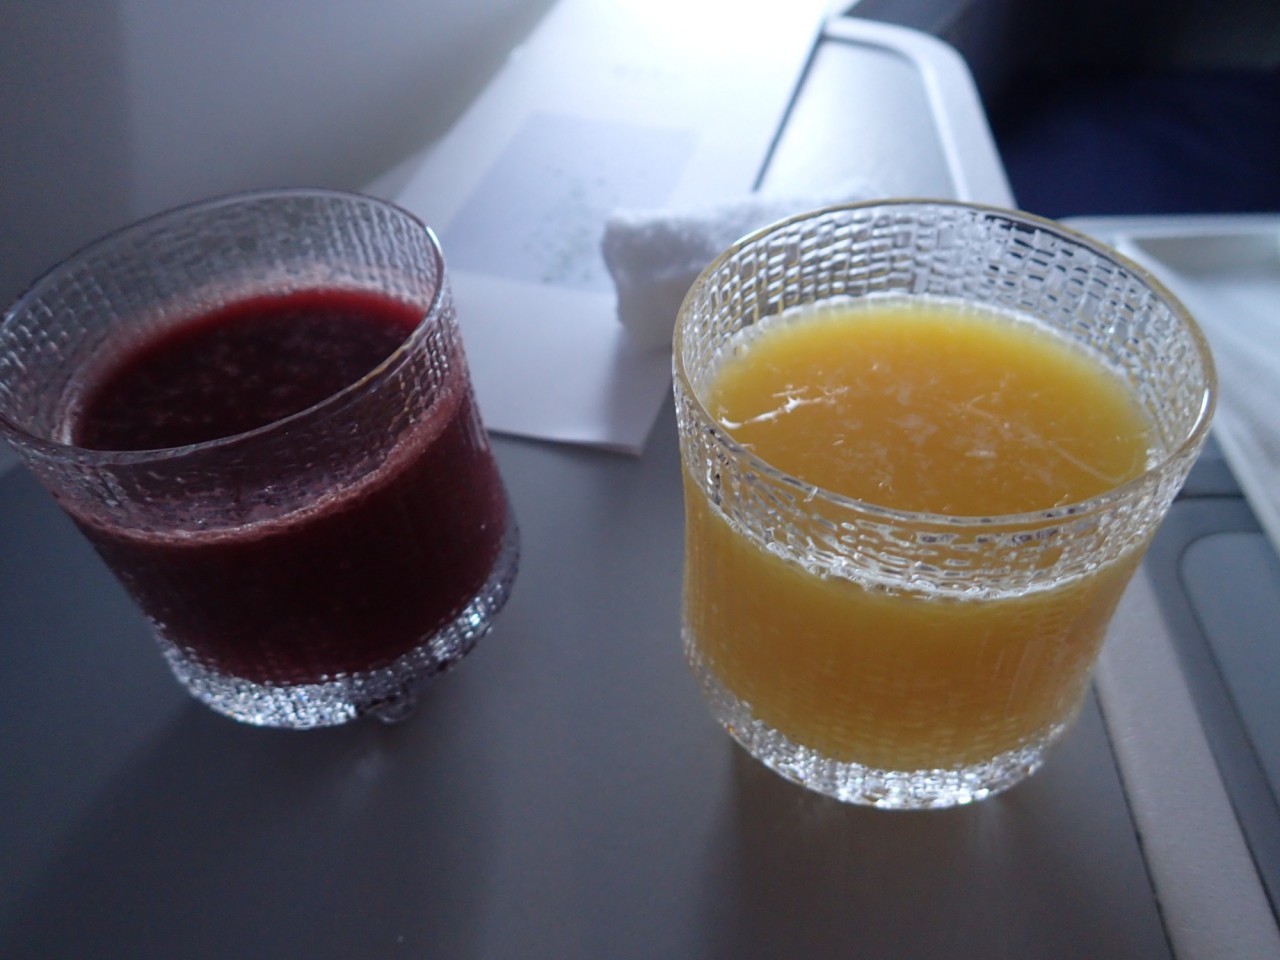 Finnair Business Class: Blueberry Juice and Orange Juice